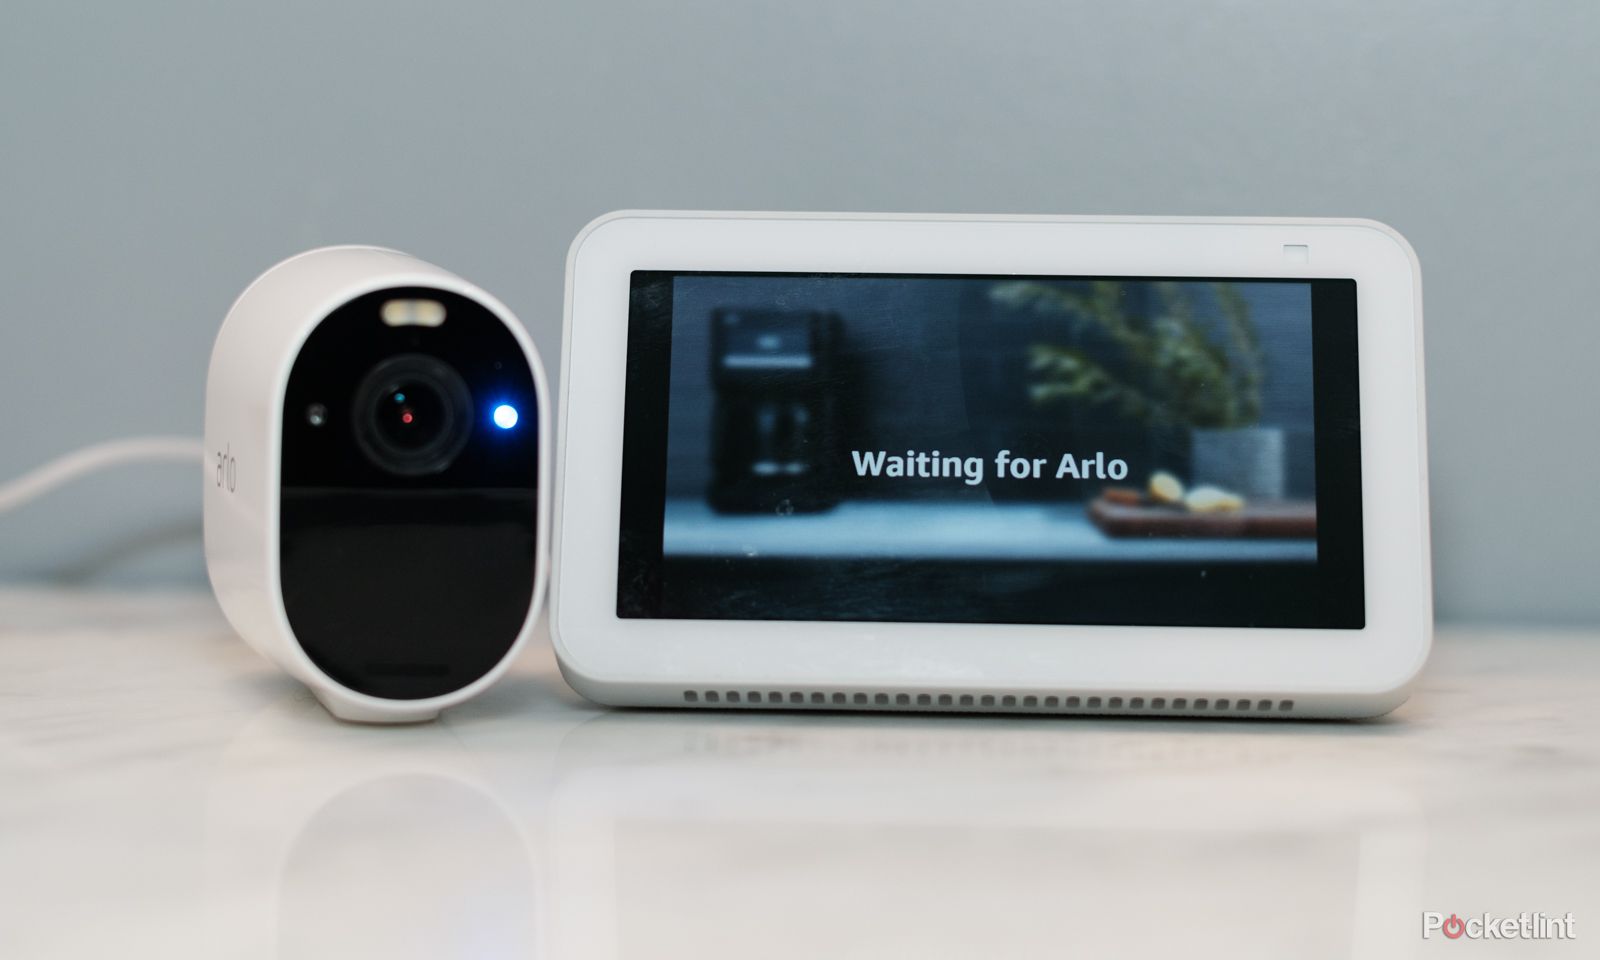 An Arlo camera with an Amazon Echo Show